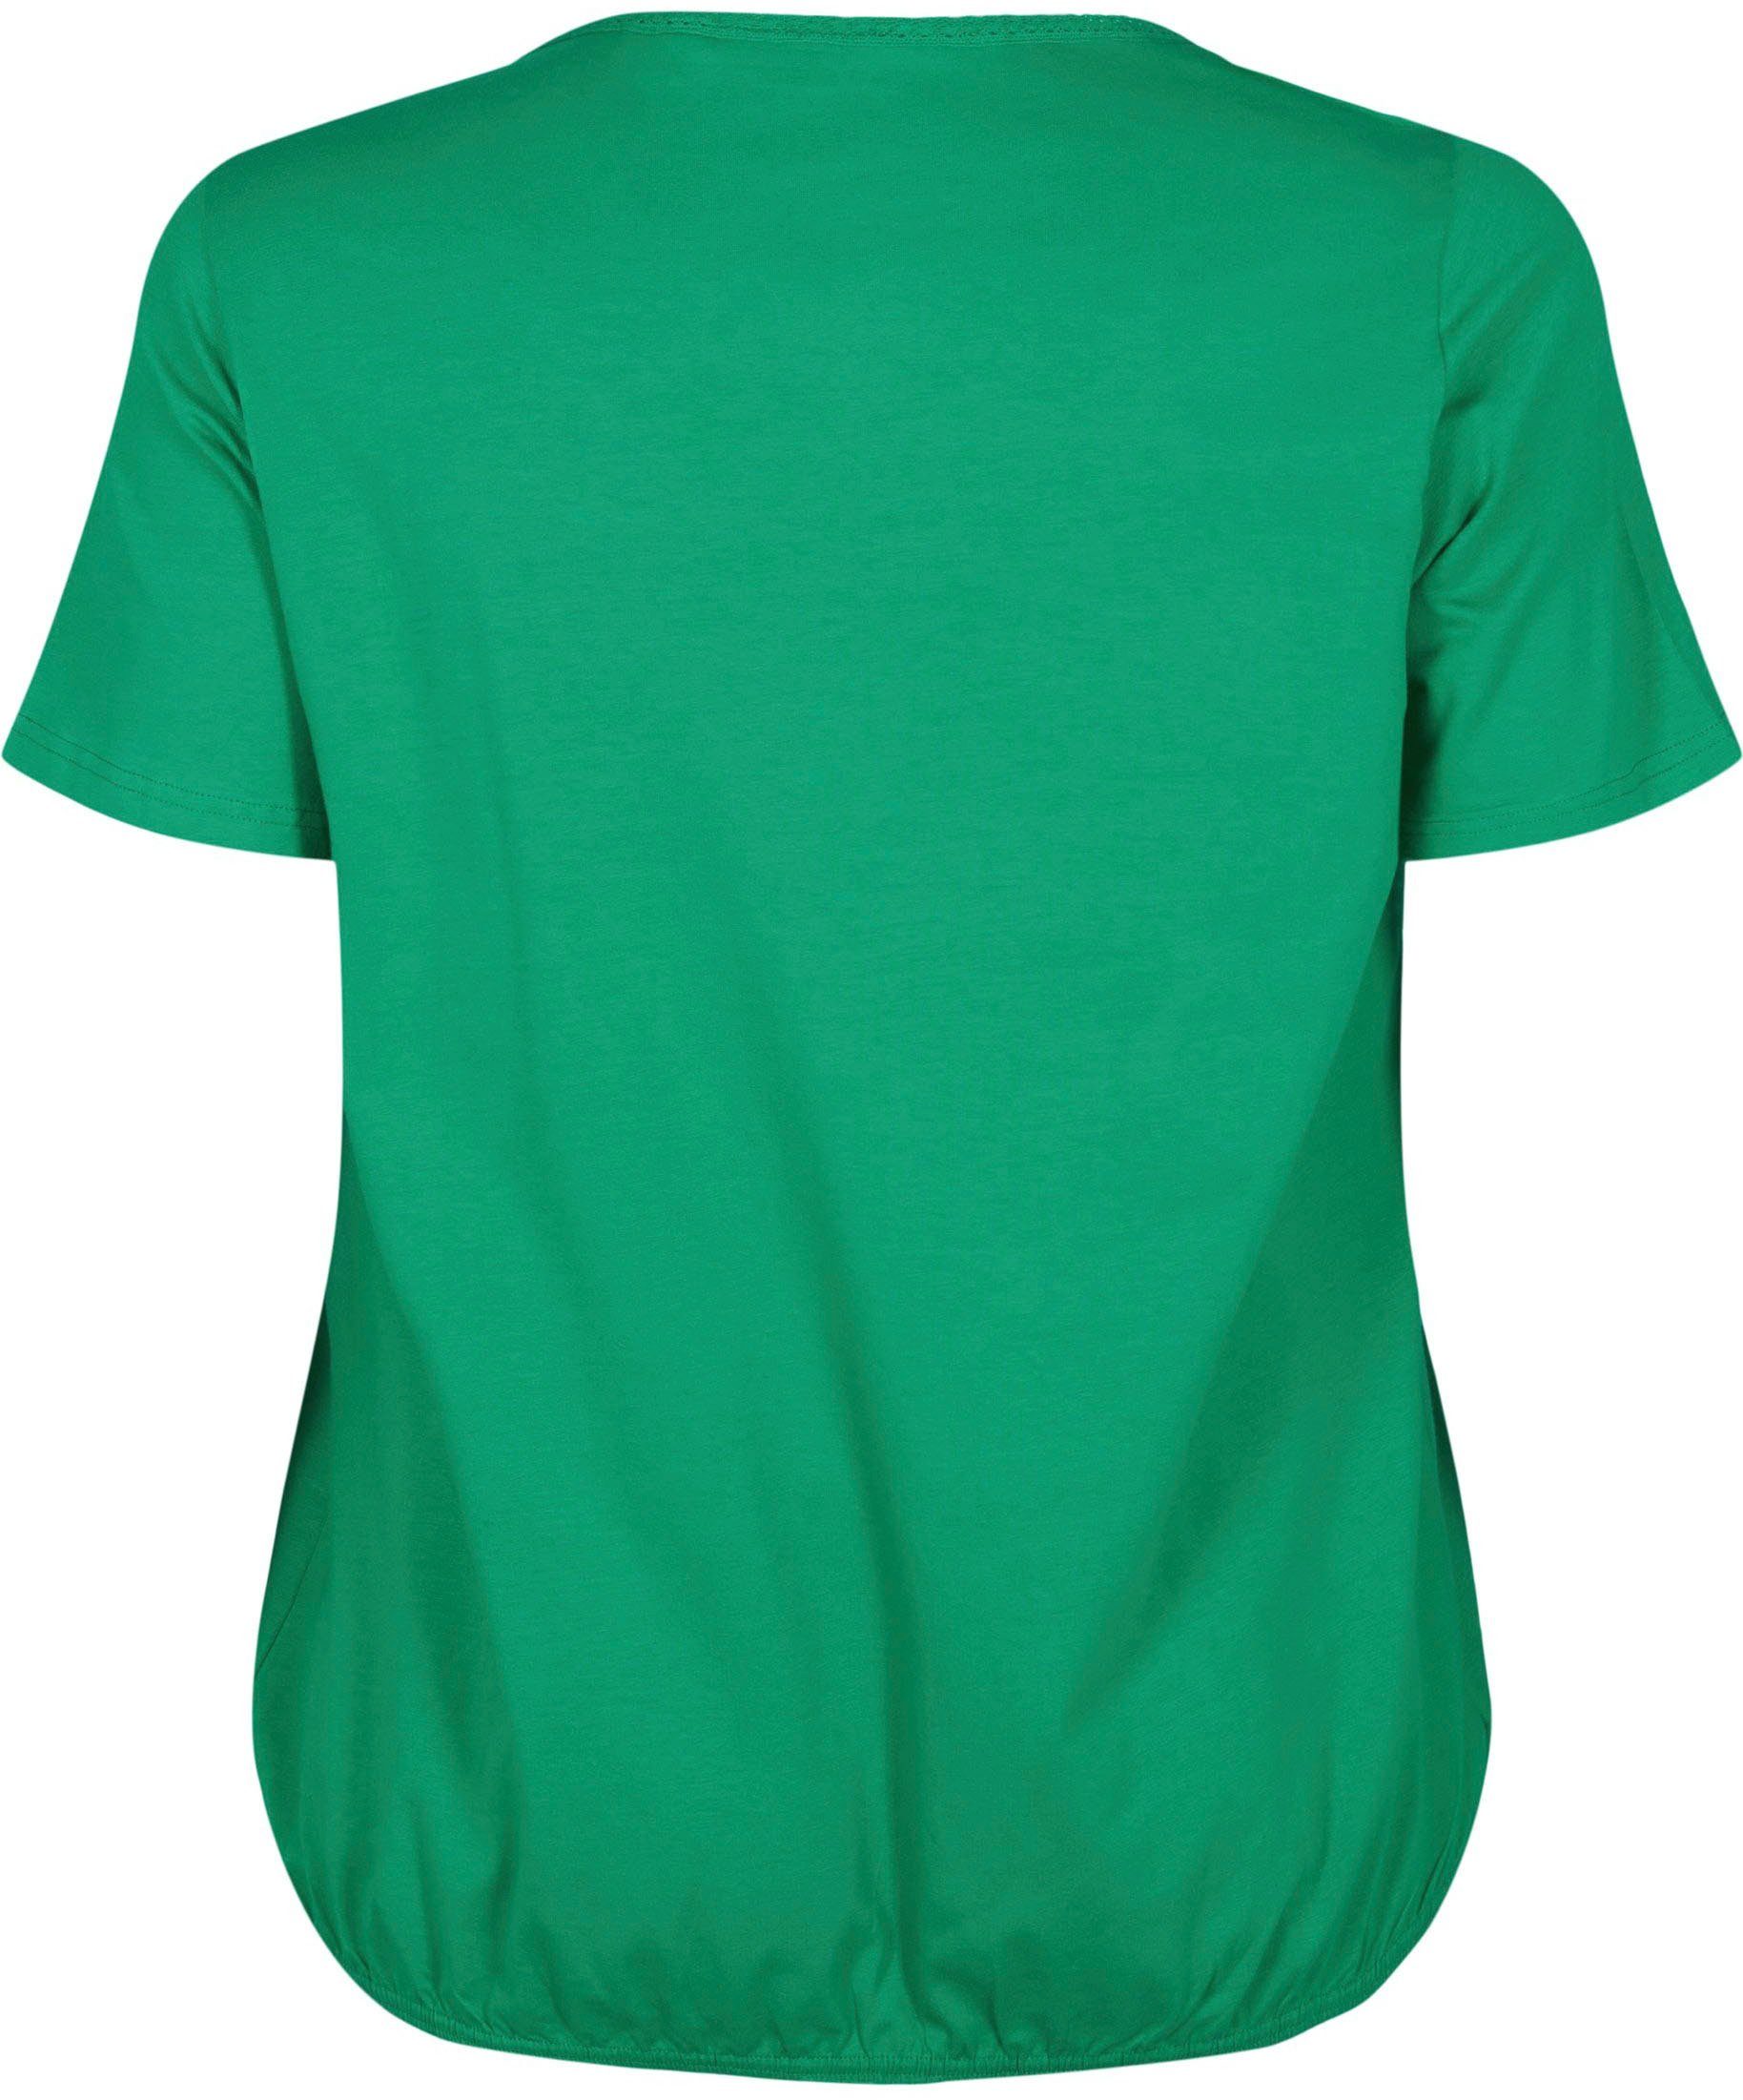 VPOLLY T-Shirt Zizzi jolly Zizzi green